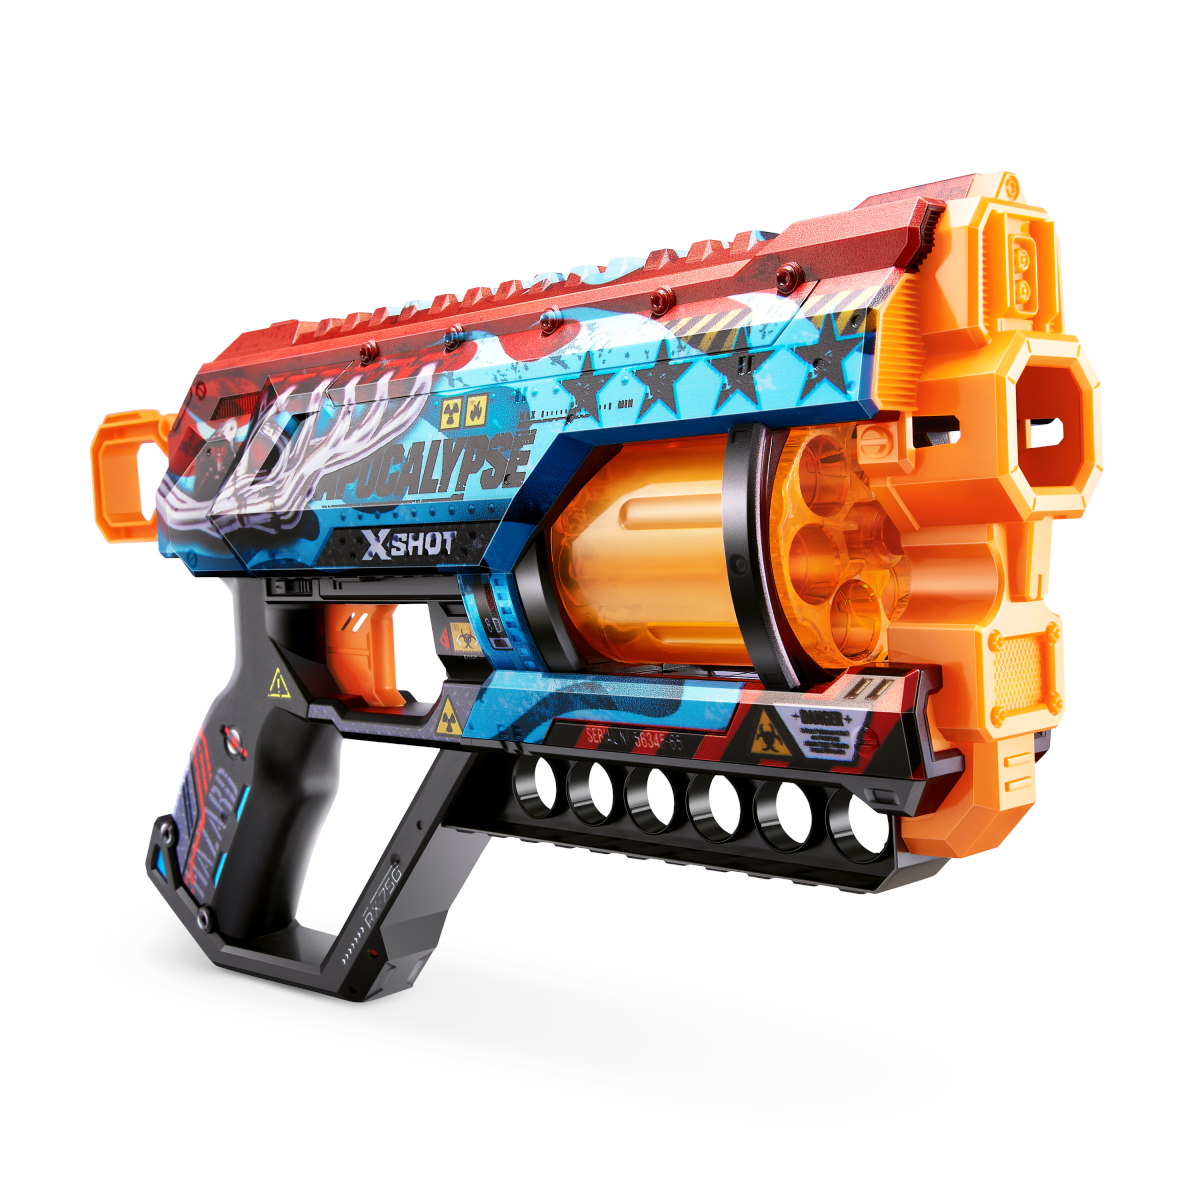 X-shot lock blaster image : r/Nerf